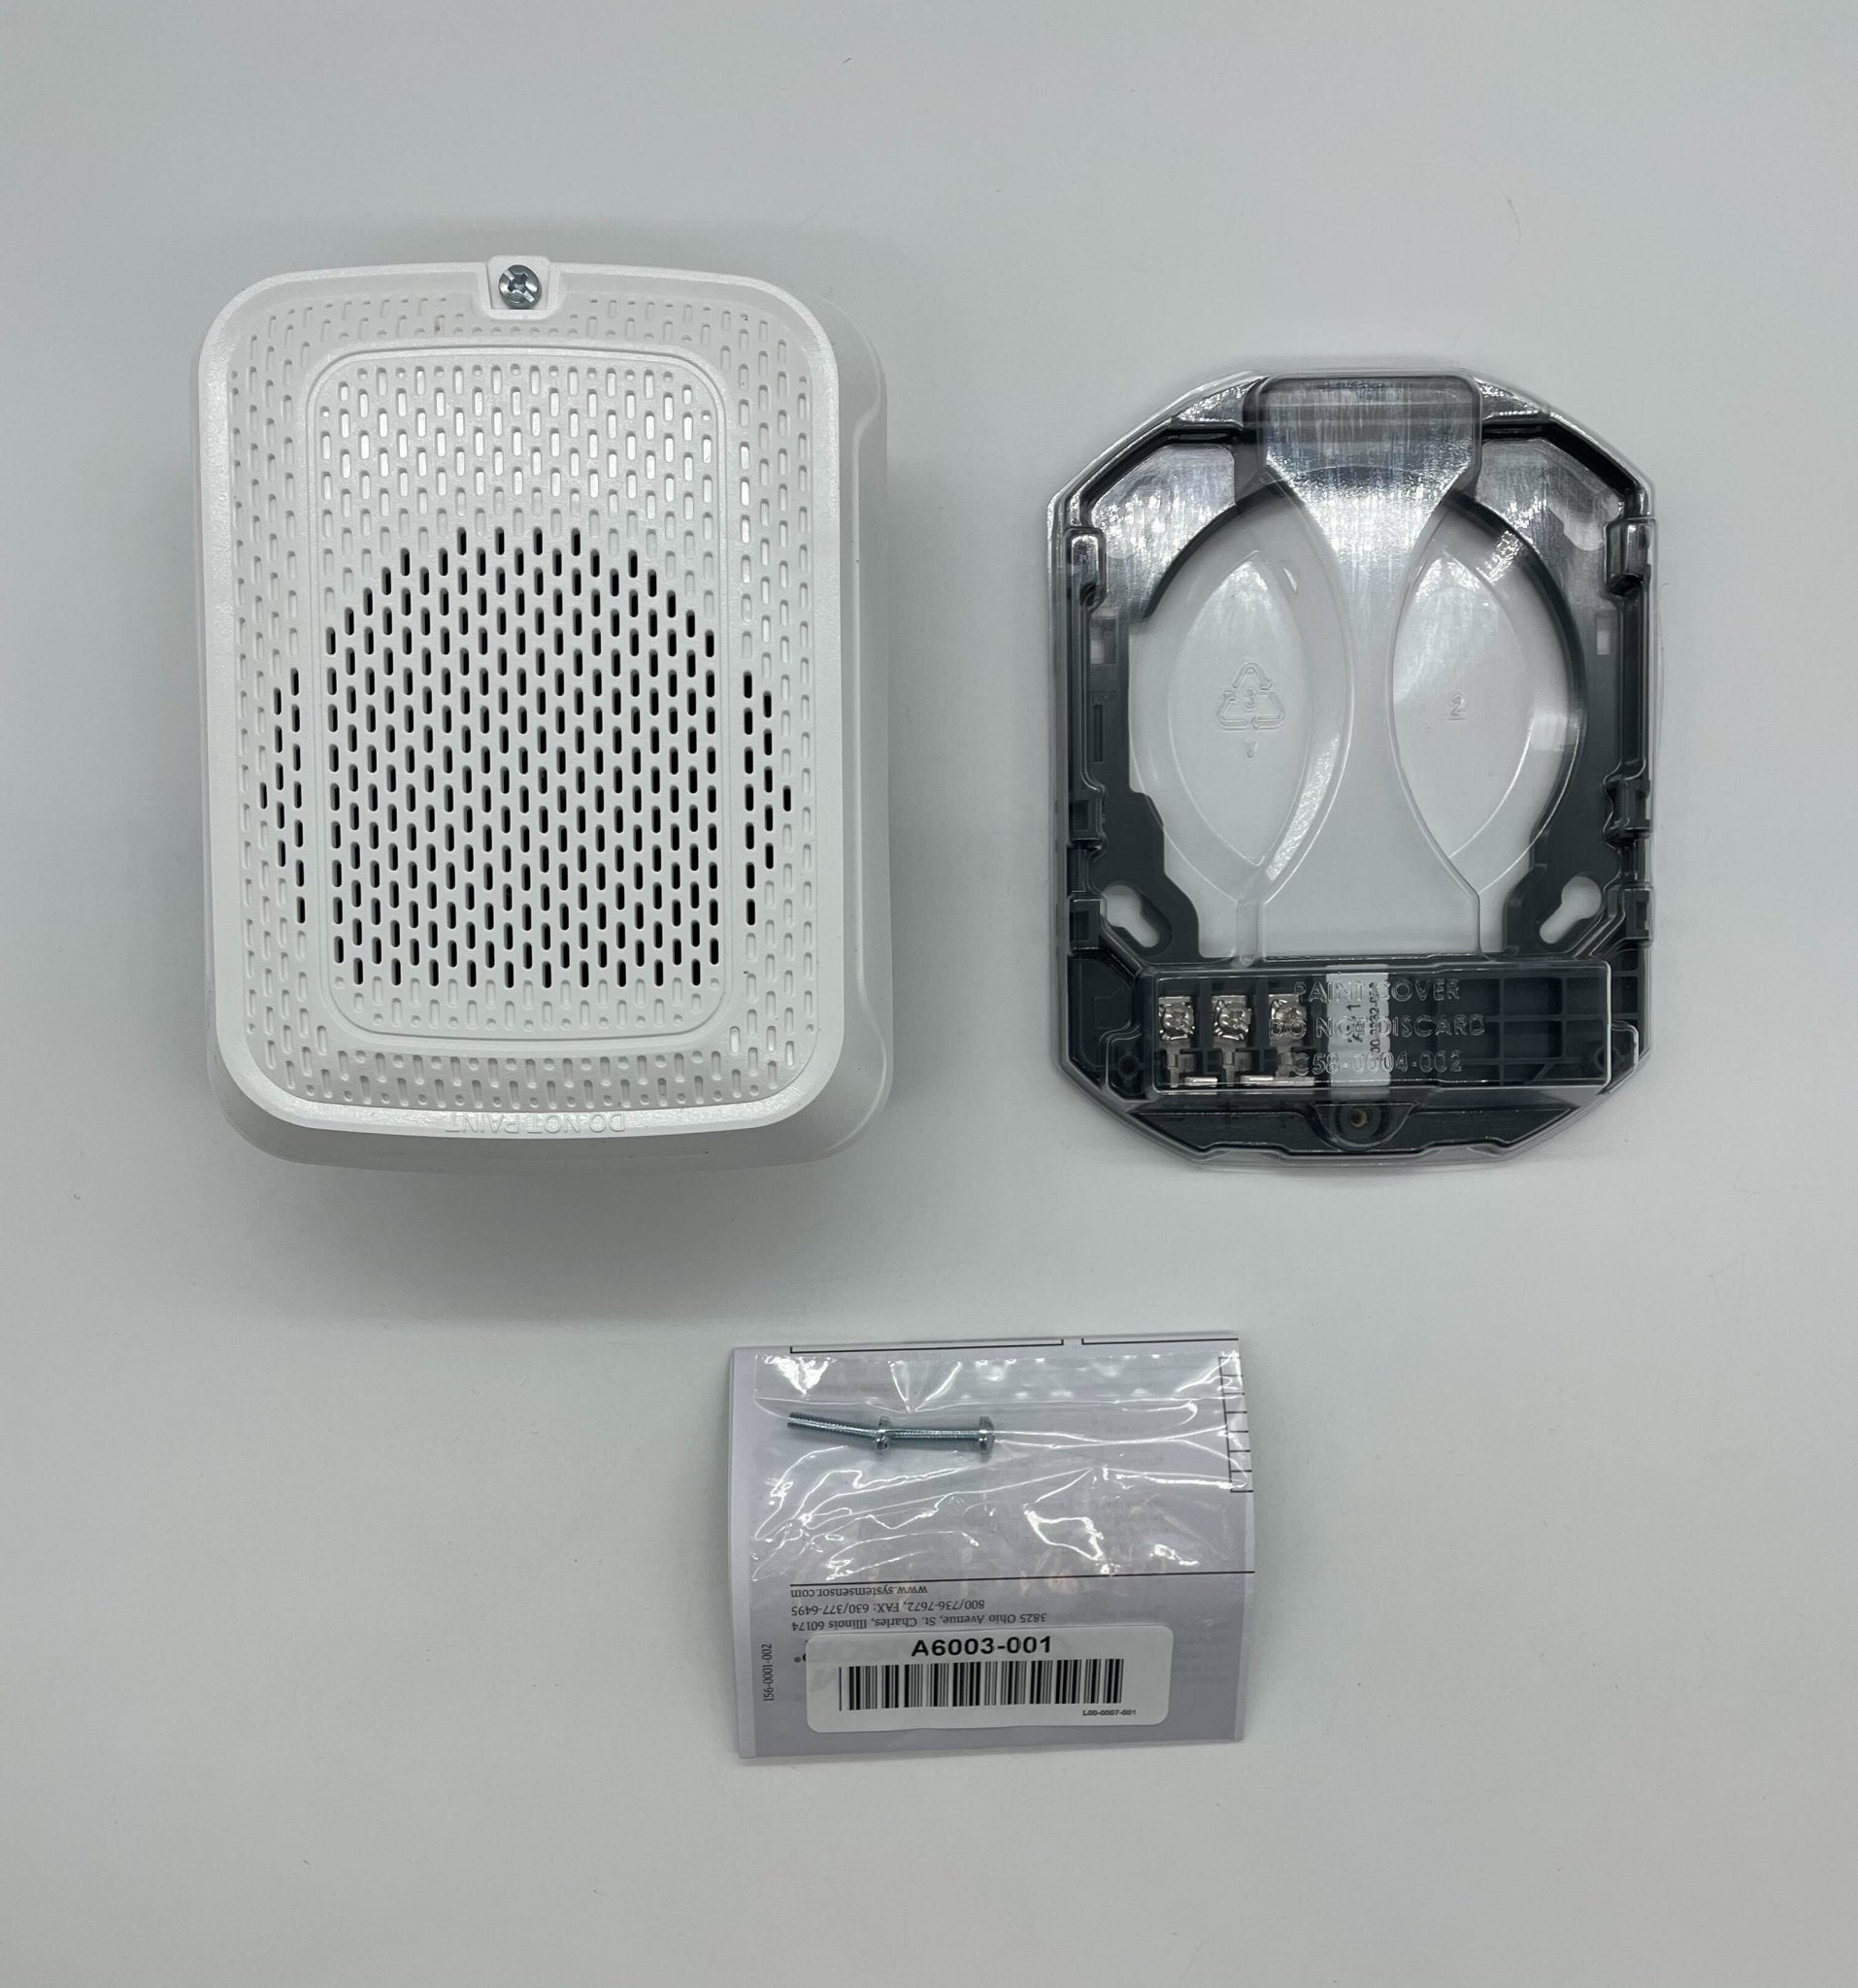 System Sensor SPWL - The Fire Alarm Supplier